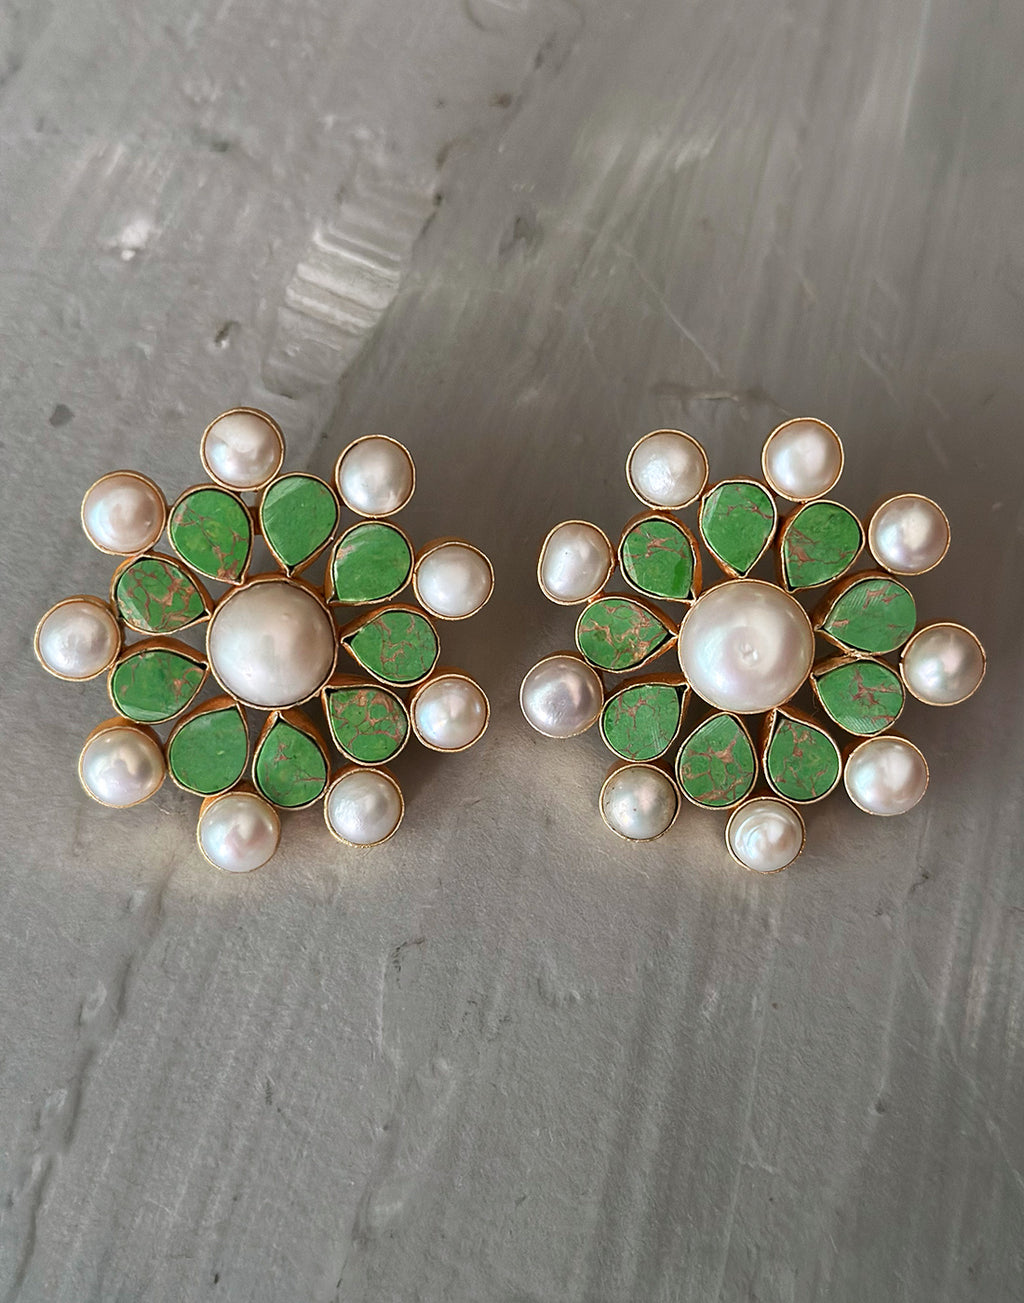 Green Bhatti Flower Earrings - Statement Earrings - Gold-Plated & Hypoallergenic Jewellery - Made in India - Dubai Jewellery - Dori